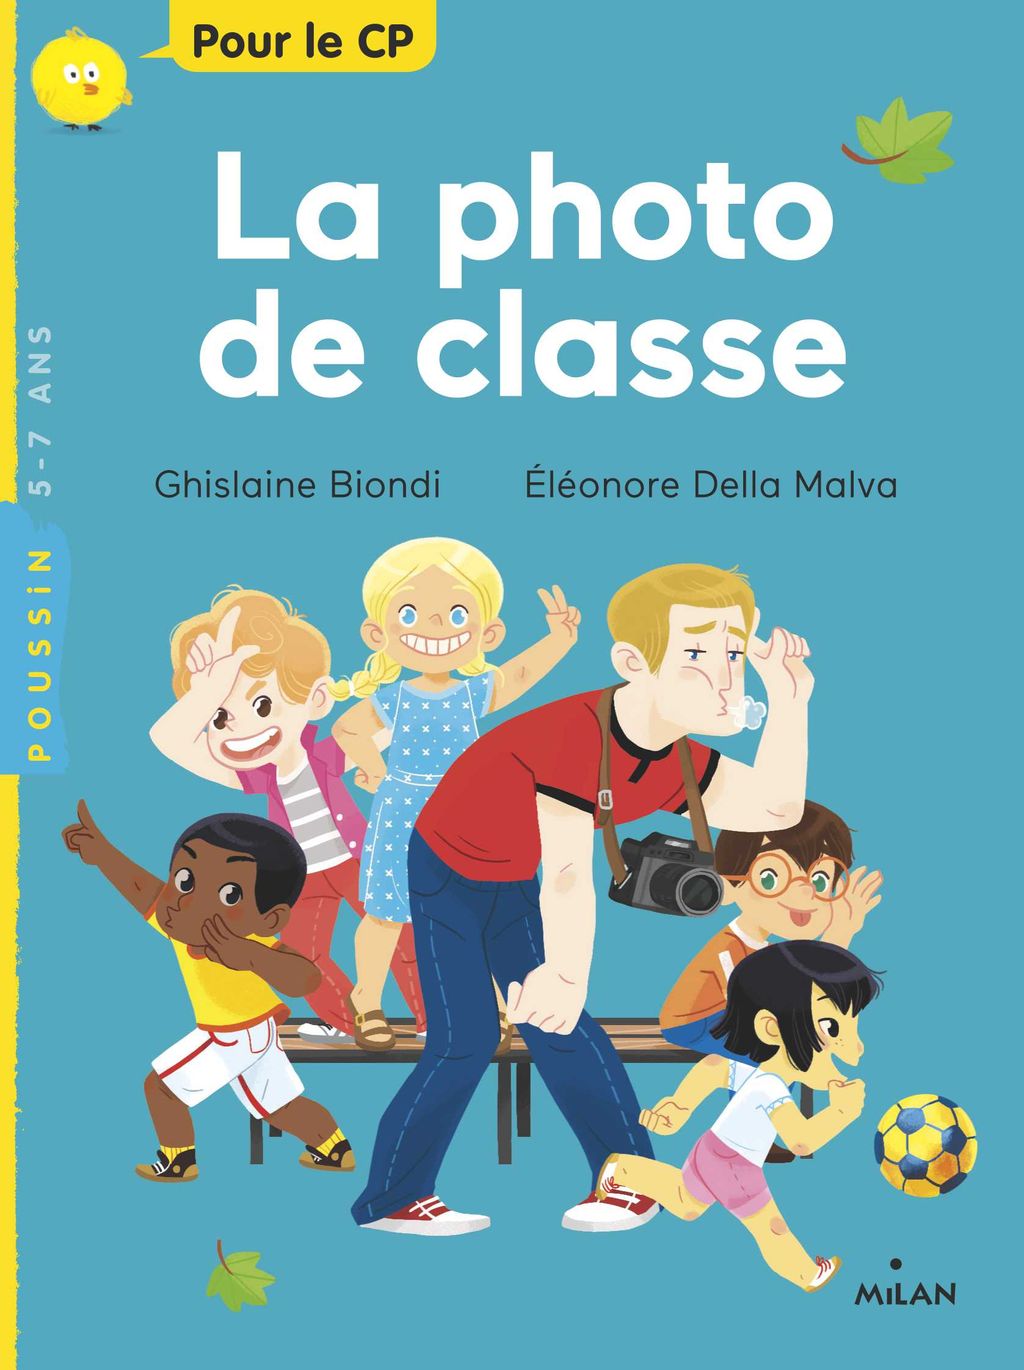 « La photo de classe » cover